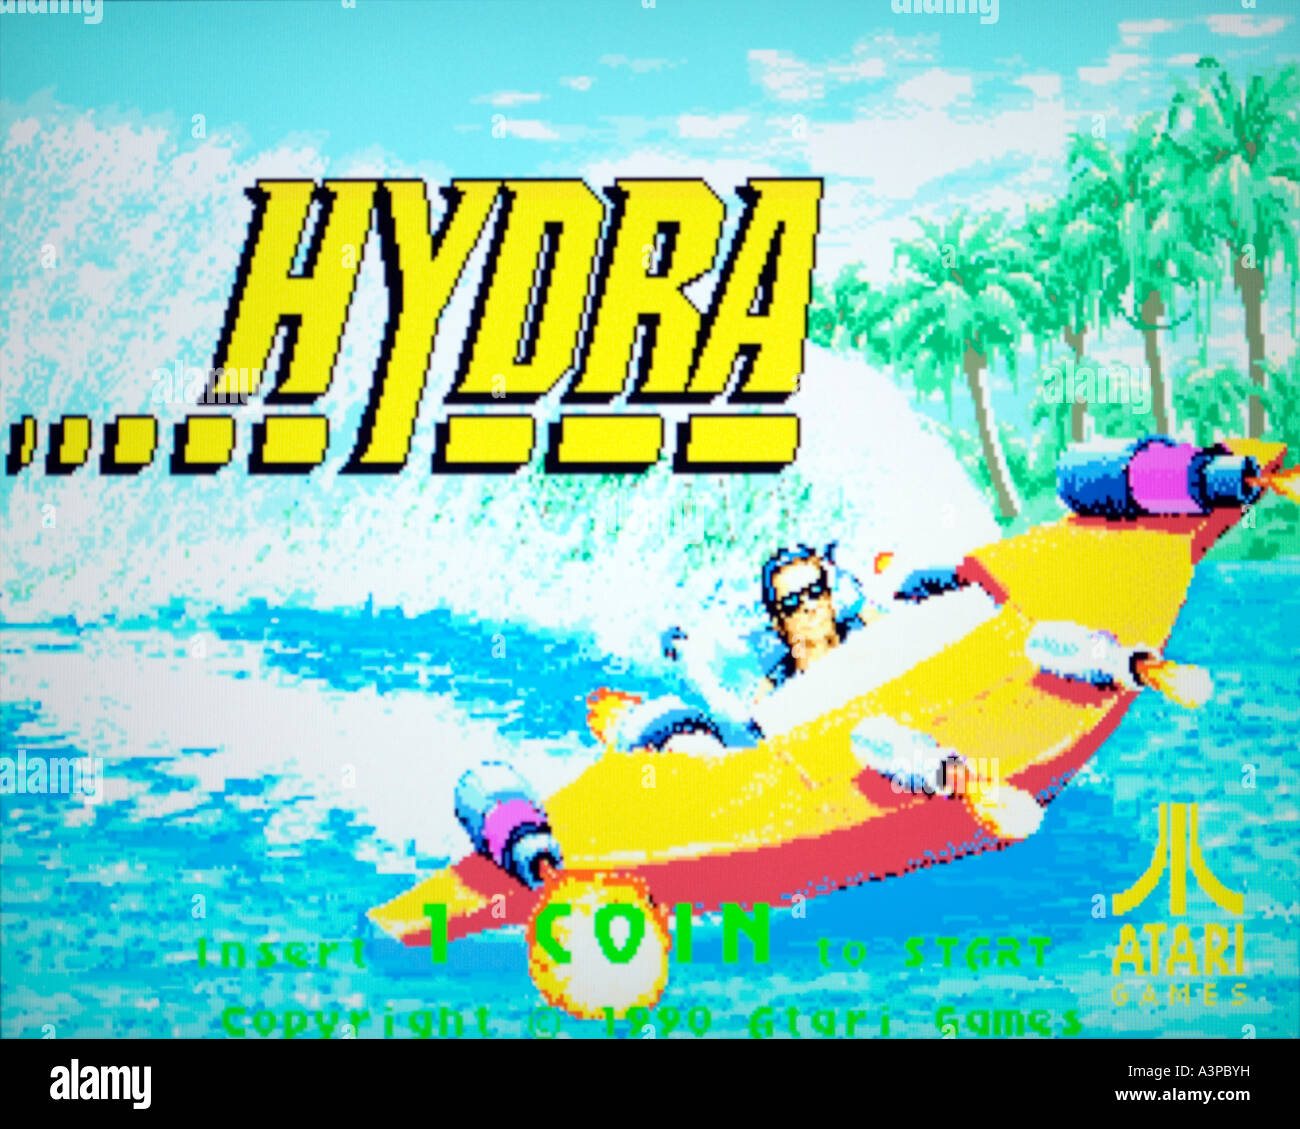 Hydra Atari Games 1990 vintage arcade videogame screenshot EDITORIAL USE ONLY Stock Photo